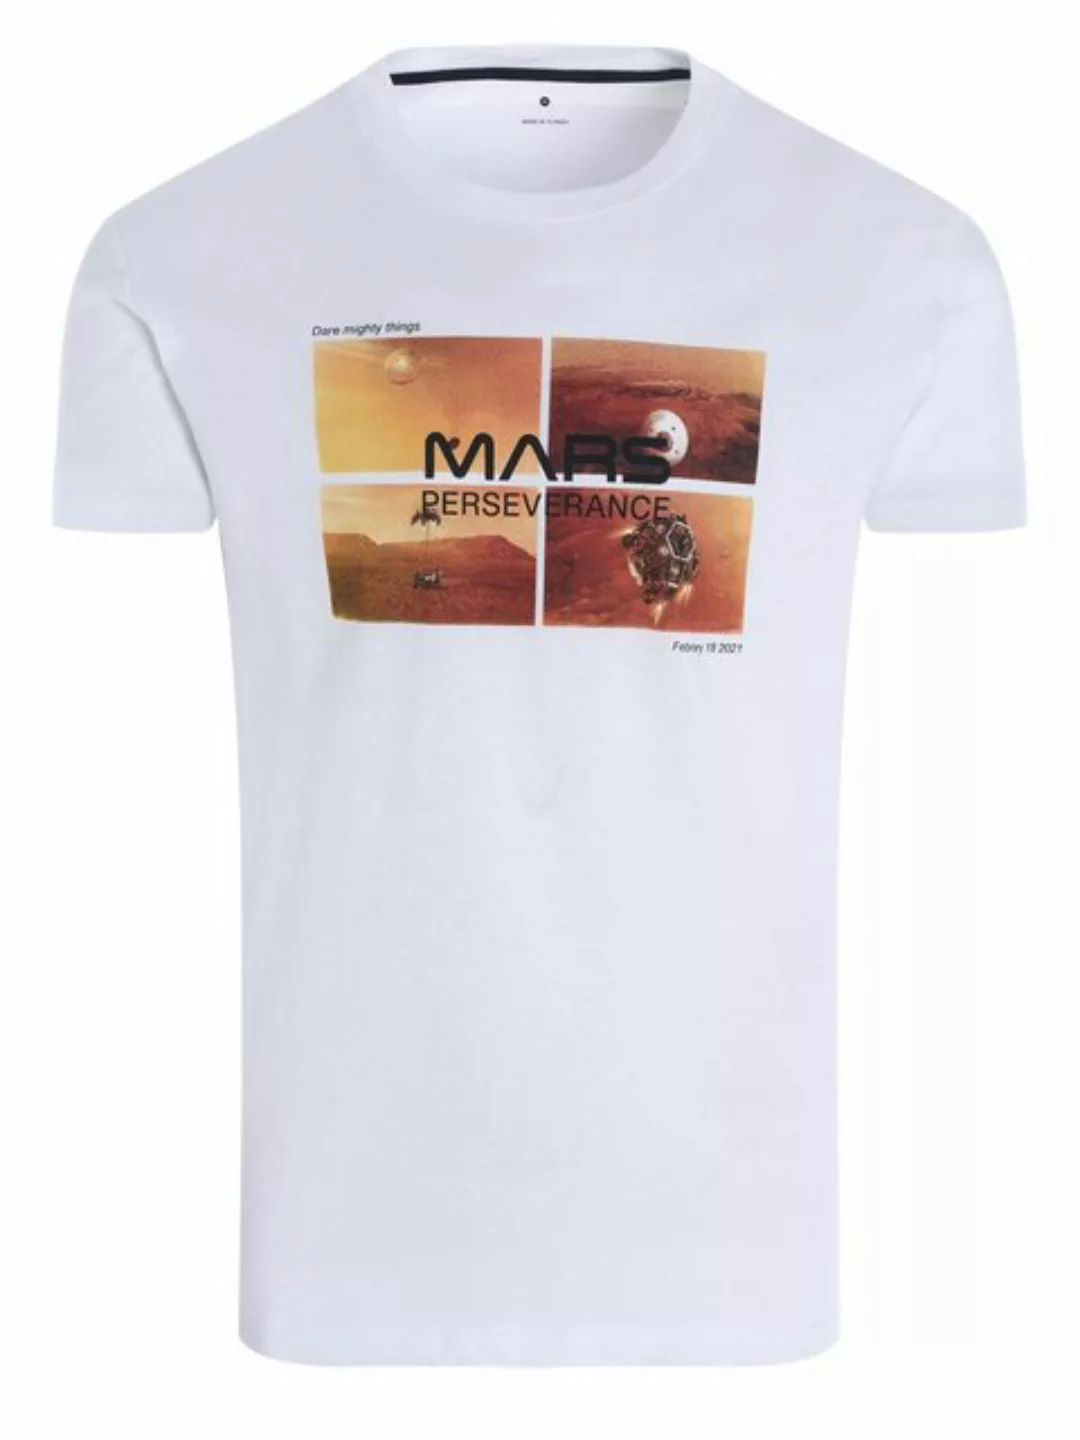 NASA T-Shirt Nasa T-Shirt günstig online kaufen